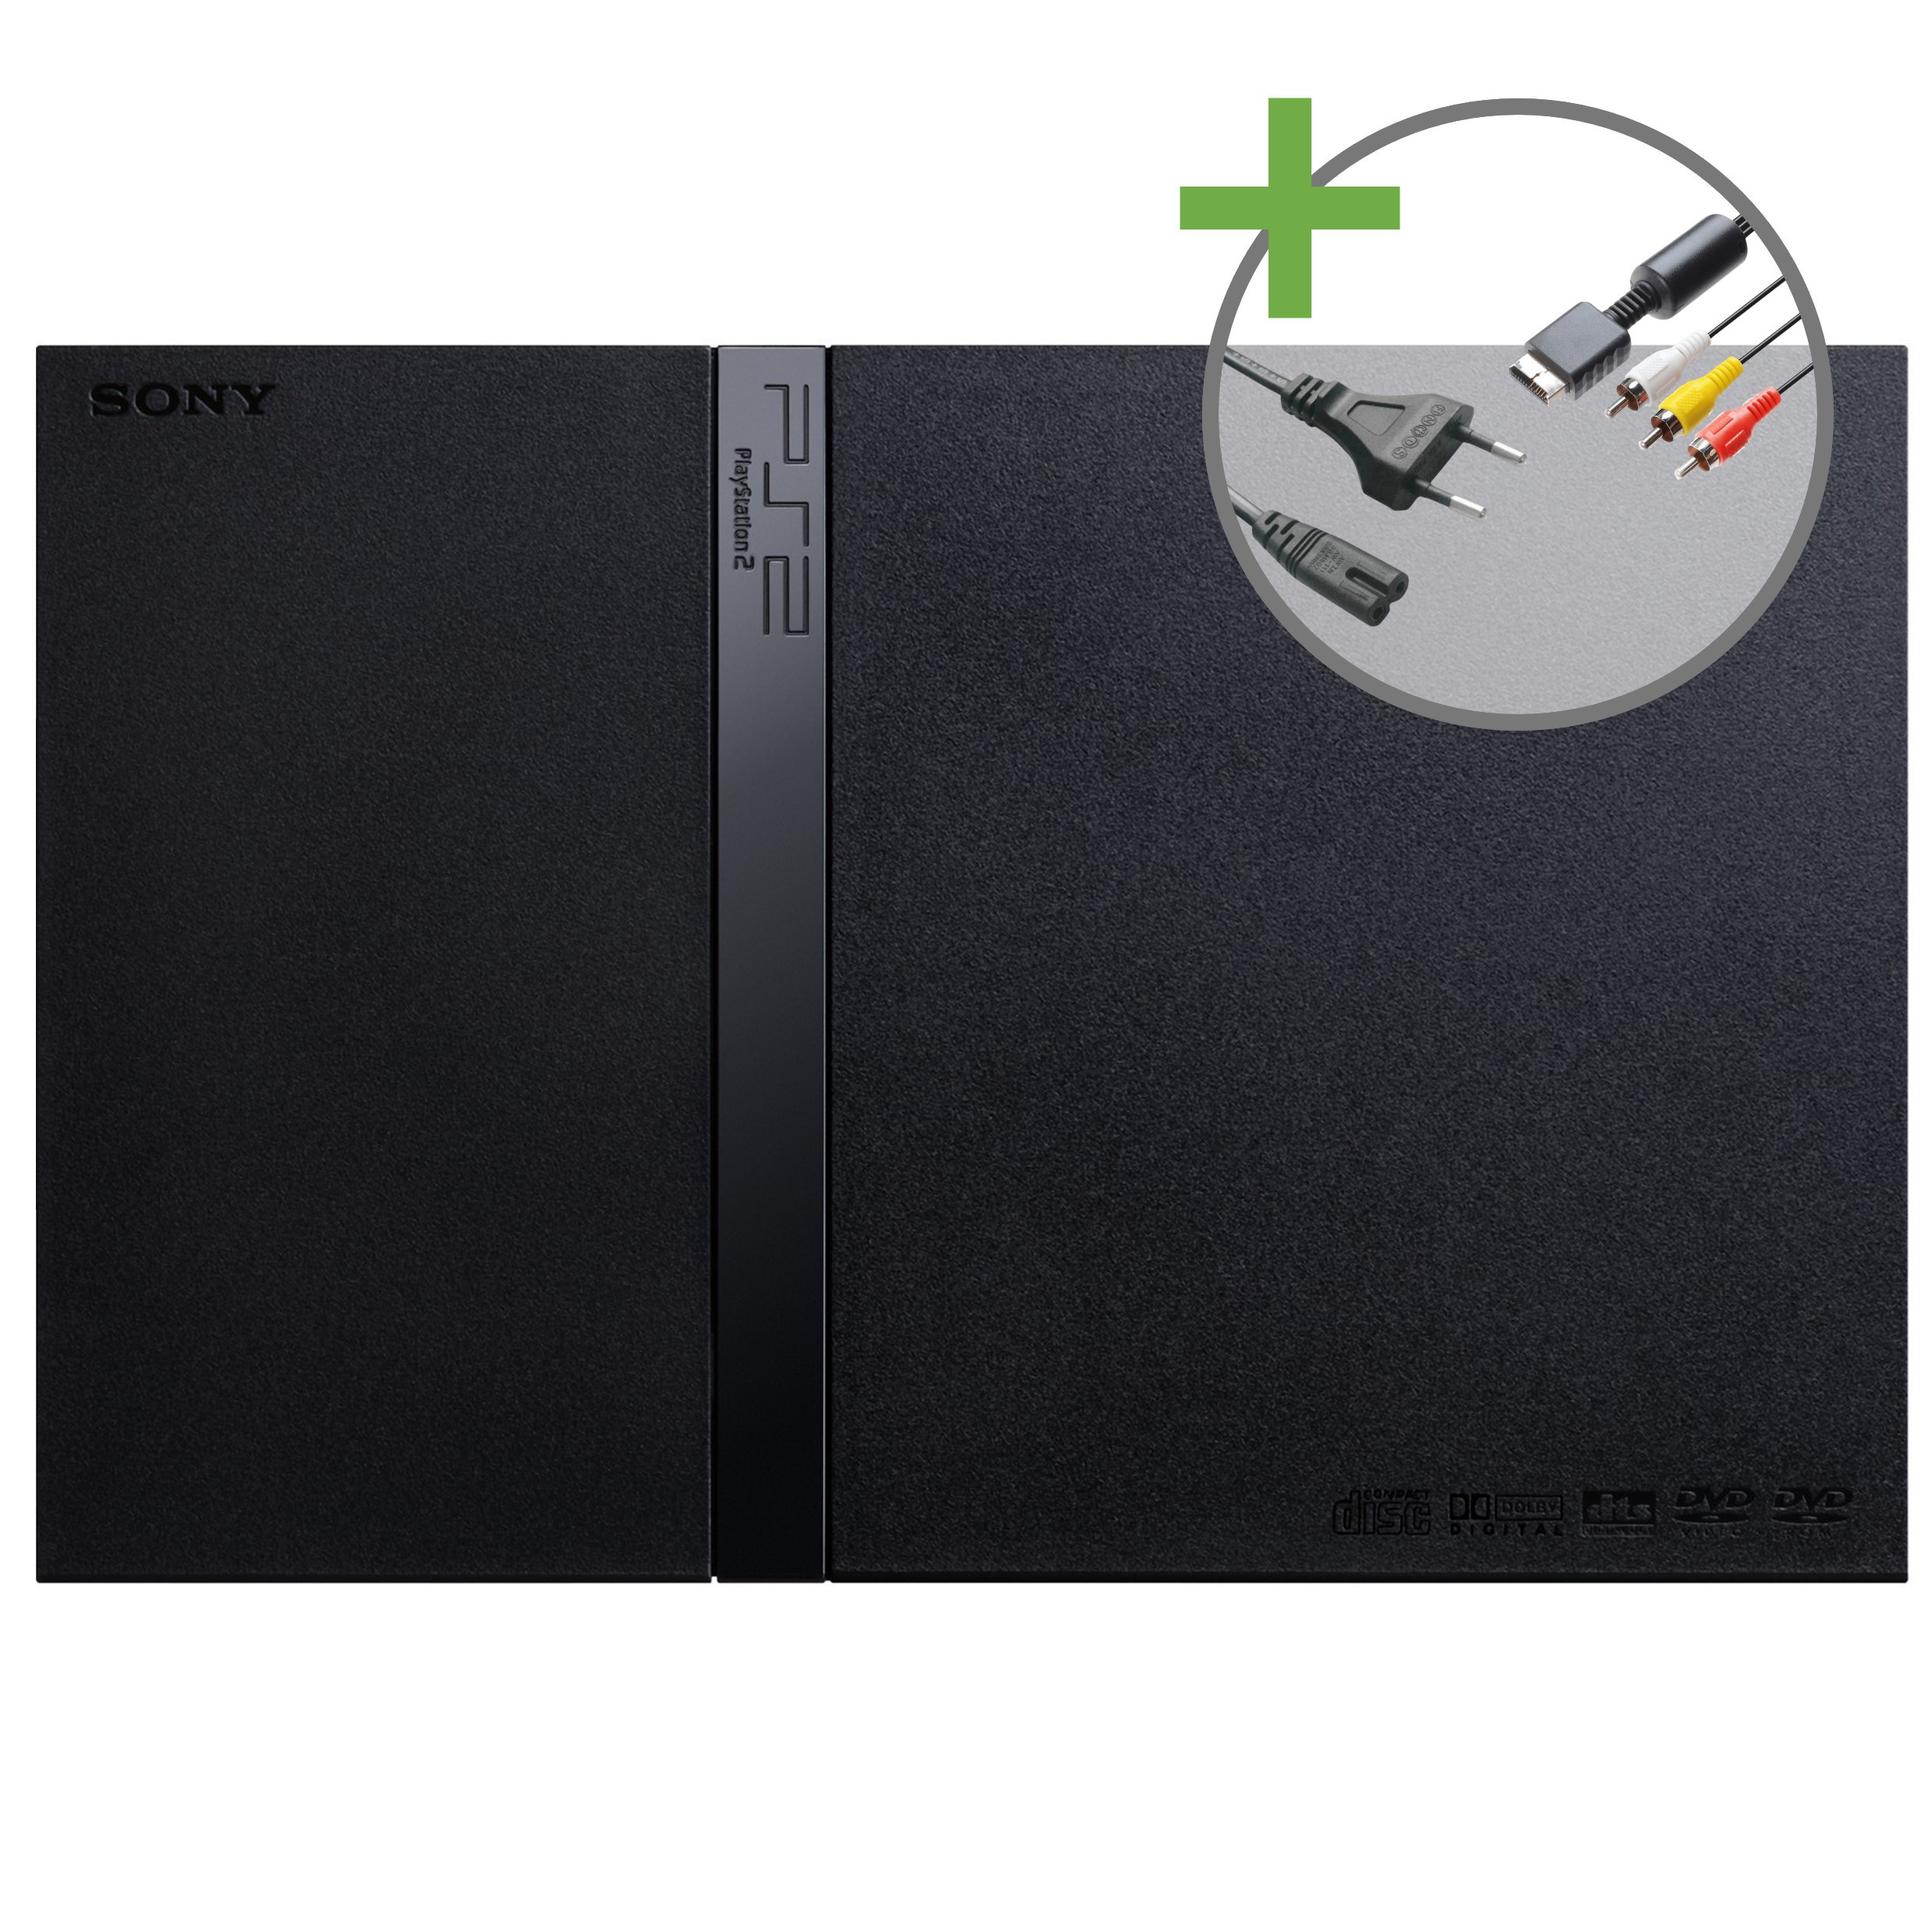 Sony PlayStation 2 Slim Starter Pack - Black Edition - Playstation 2 Hardware - 3